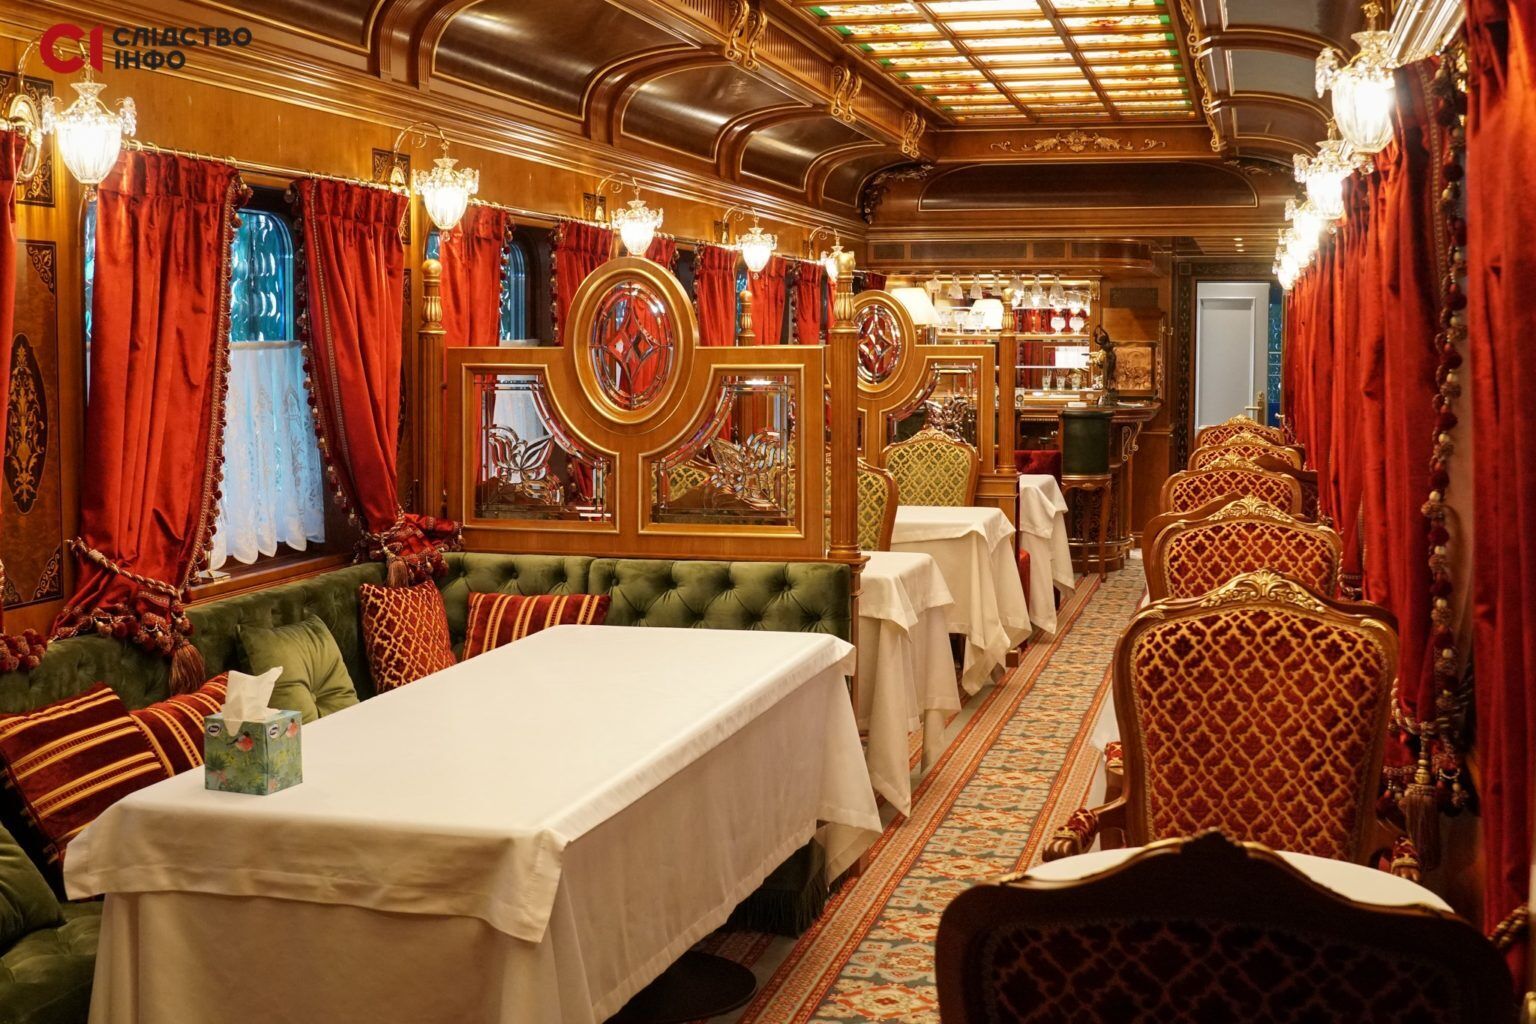 Во дворце Медведчука нашли "Золотой вагон-ресторан" со стаканами с гербом России. Фото